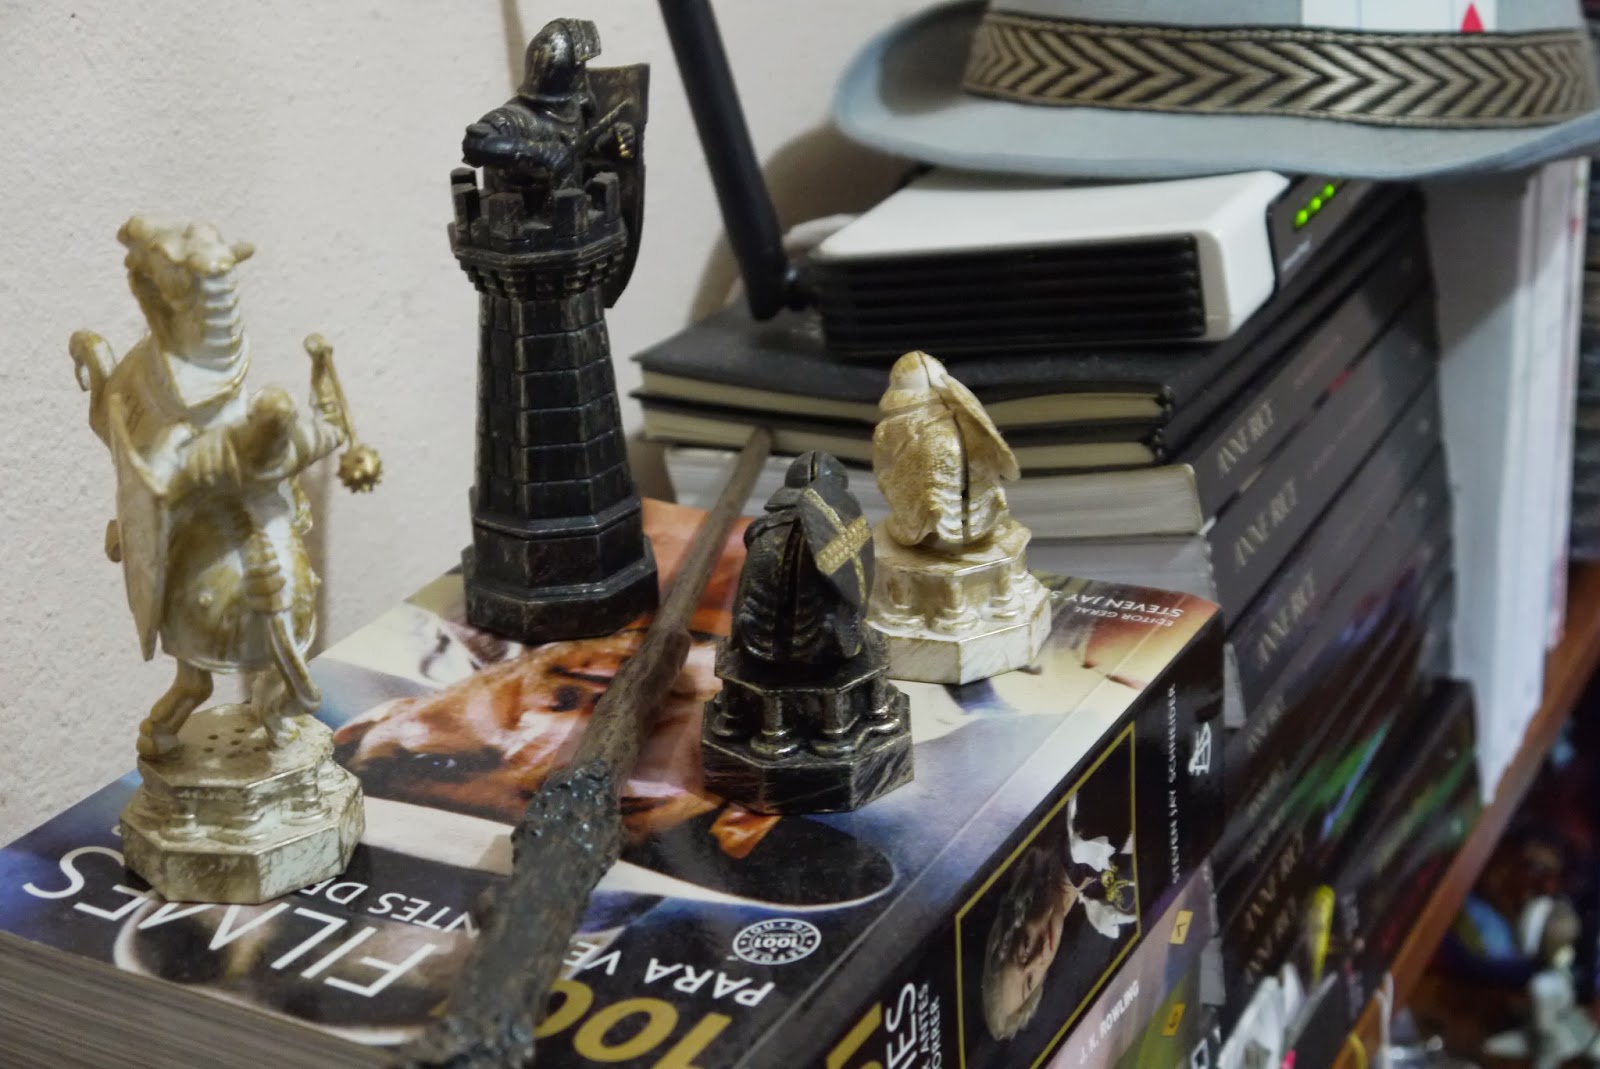 Xadrez de Bruxo (Wizard Chess) de Harry Potter e a Pedra Filosofal « Blog  de Brinquedo